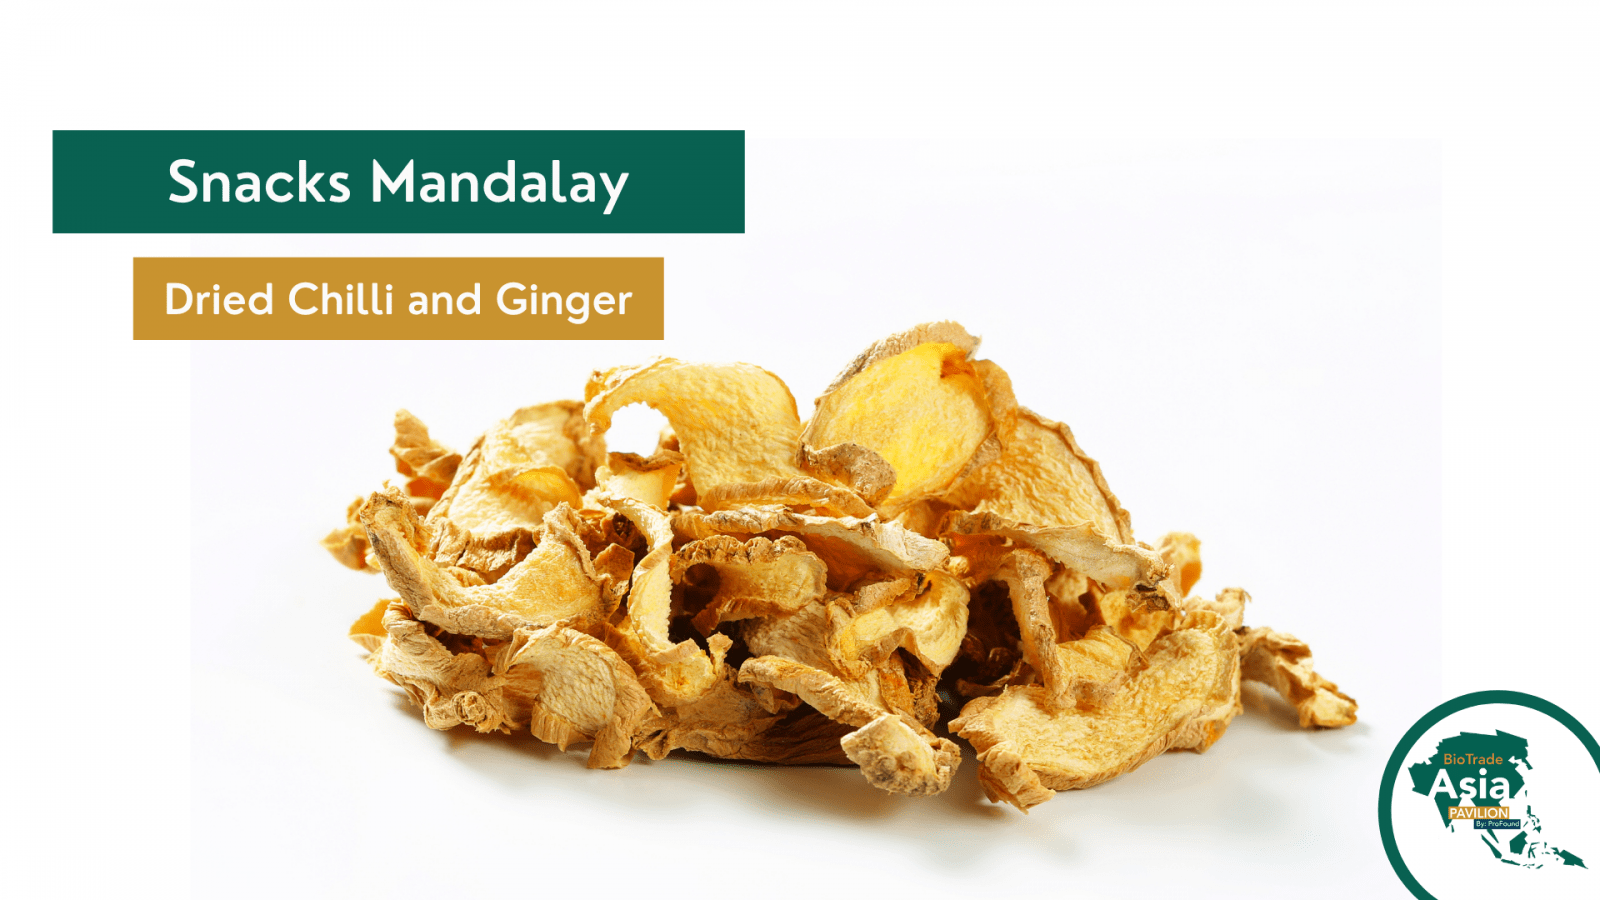 Snacks Mandalay Ginger